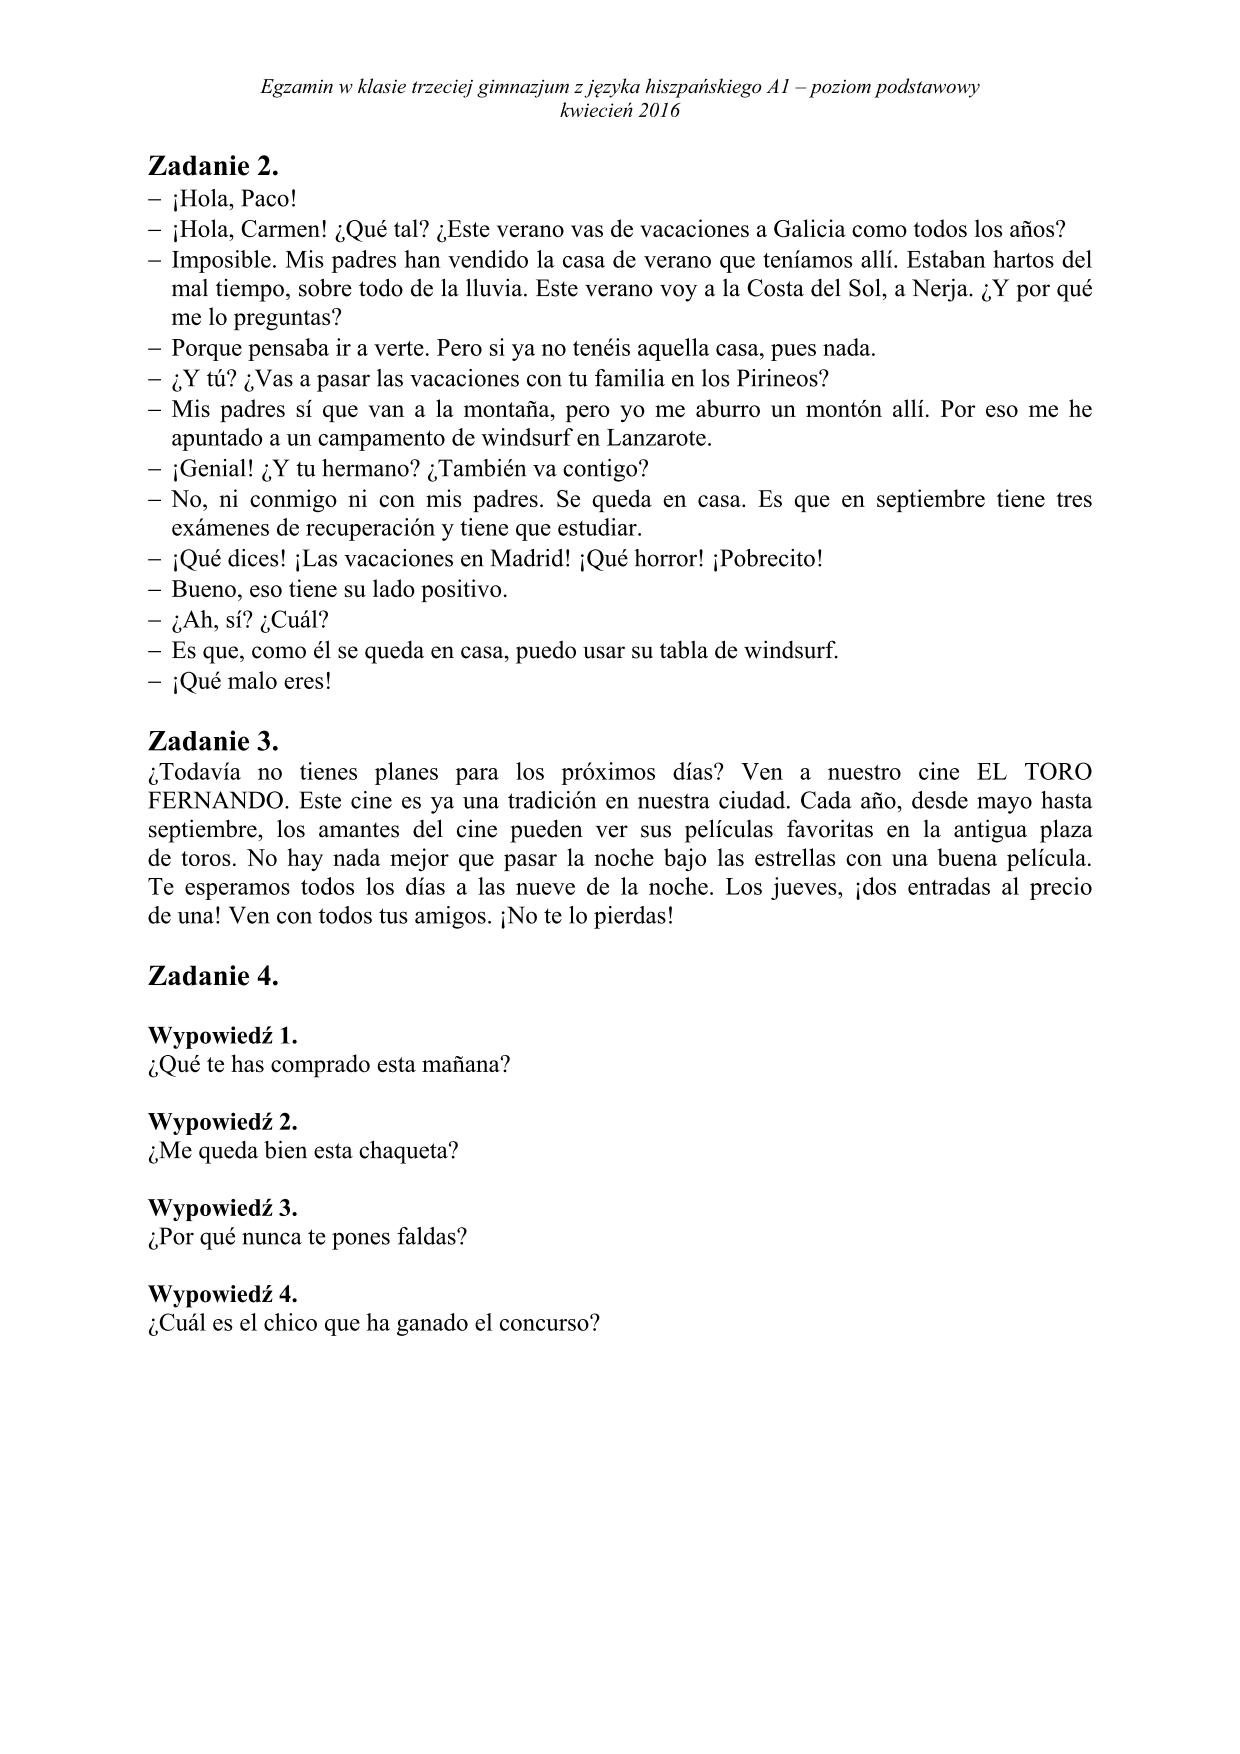 transkrypcja-hiszpanski-poziom-podstawowy-egzamin-gimnazjalny-2016 - 2